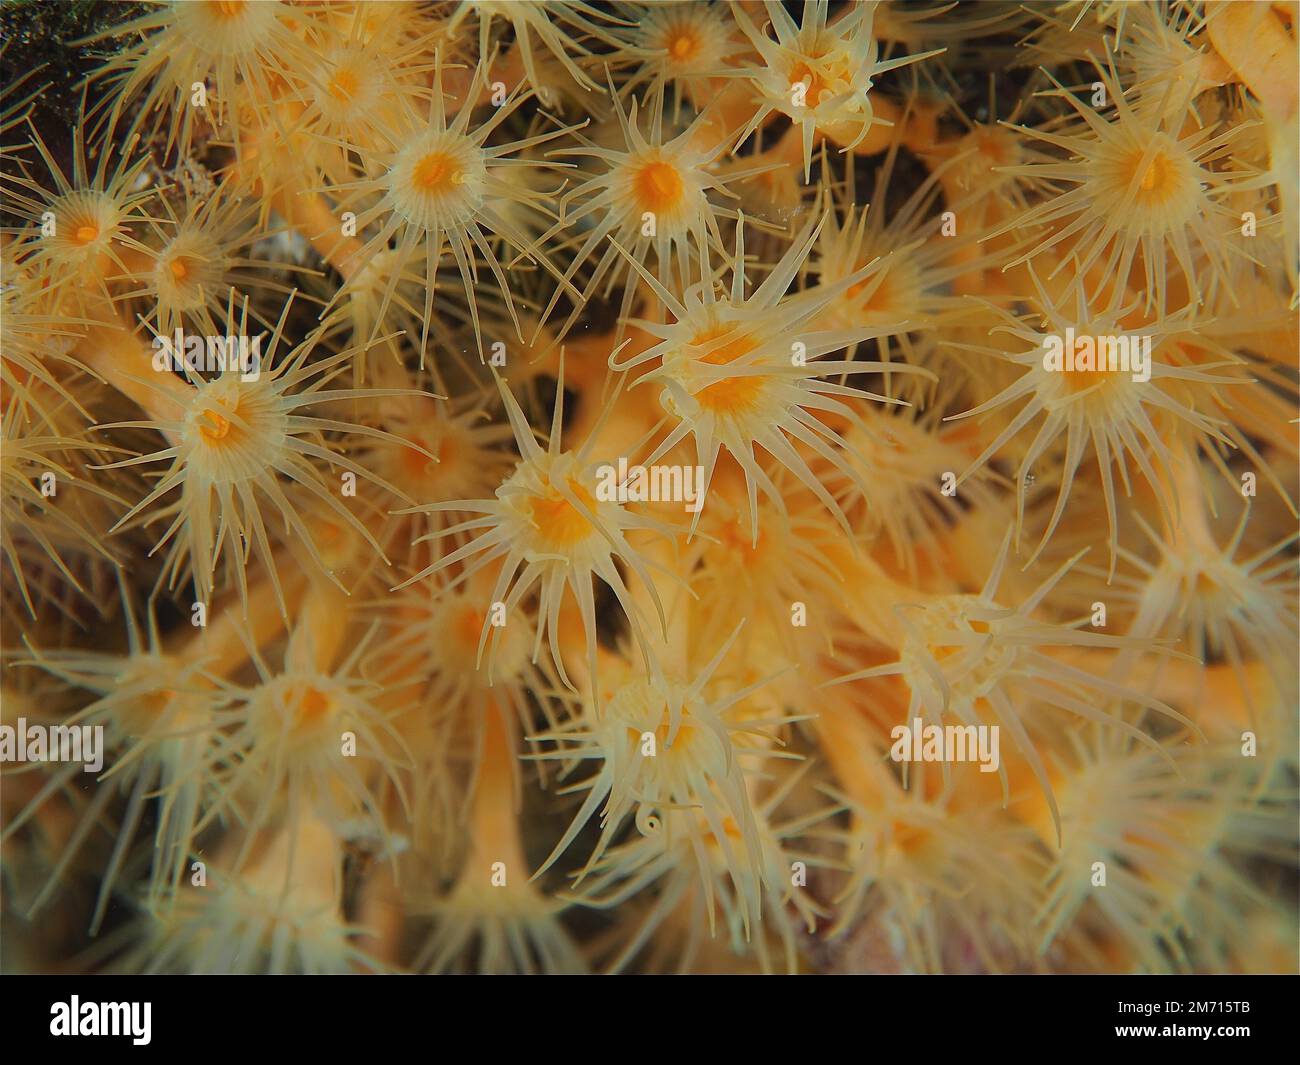 Several specimens of yellow cluster anemone (Parazoanthus axinellae) in the Mediterranean Sea. Dive site Cap de Creus, Rosas, Costa Brava, Spain Stock Photo